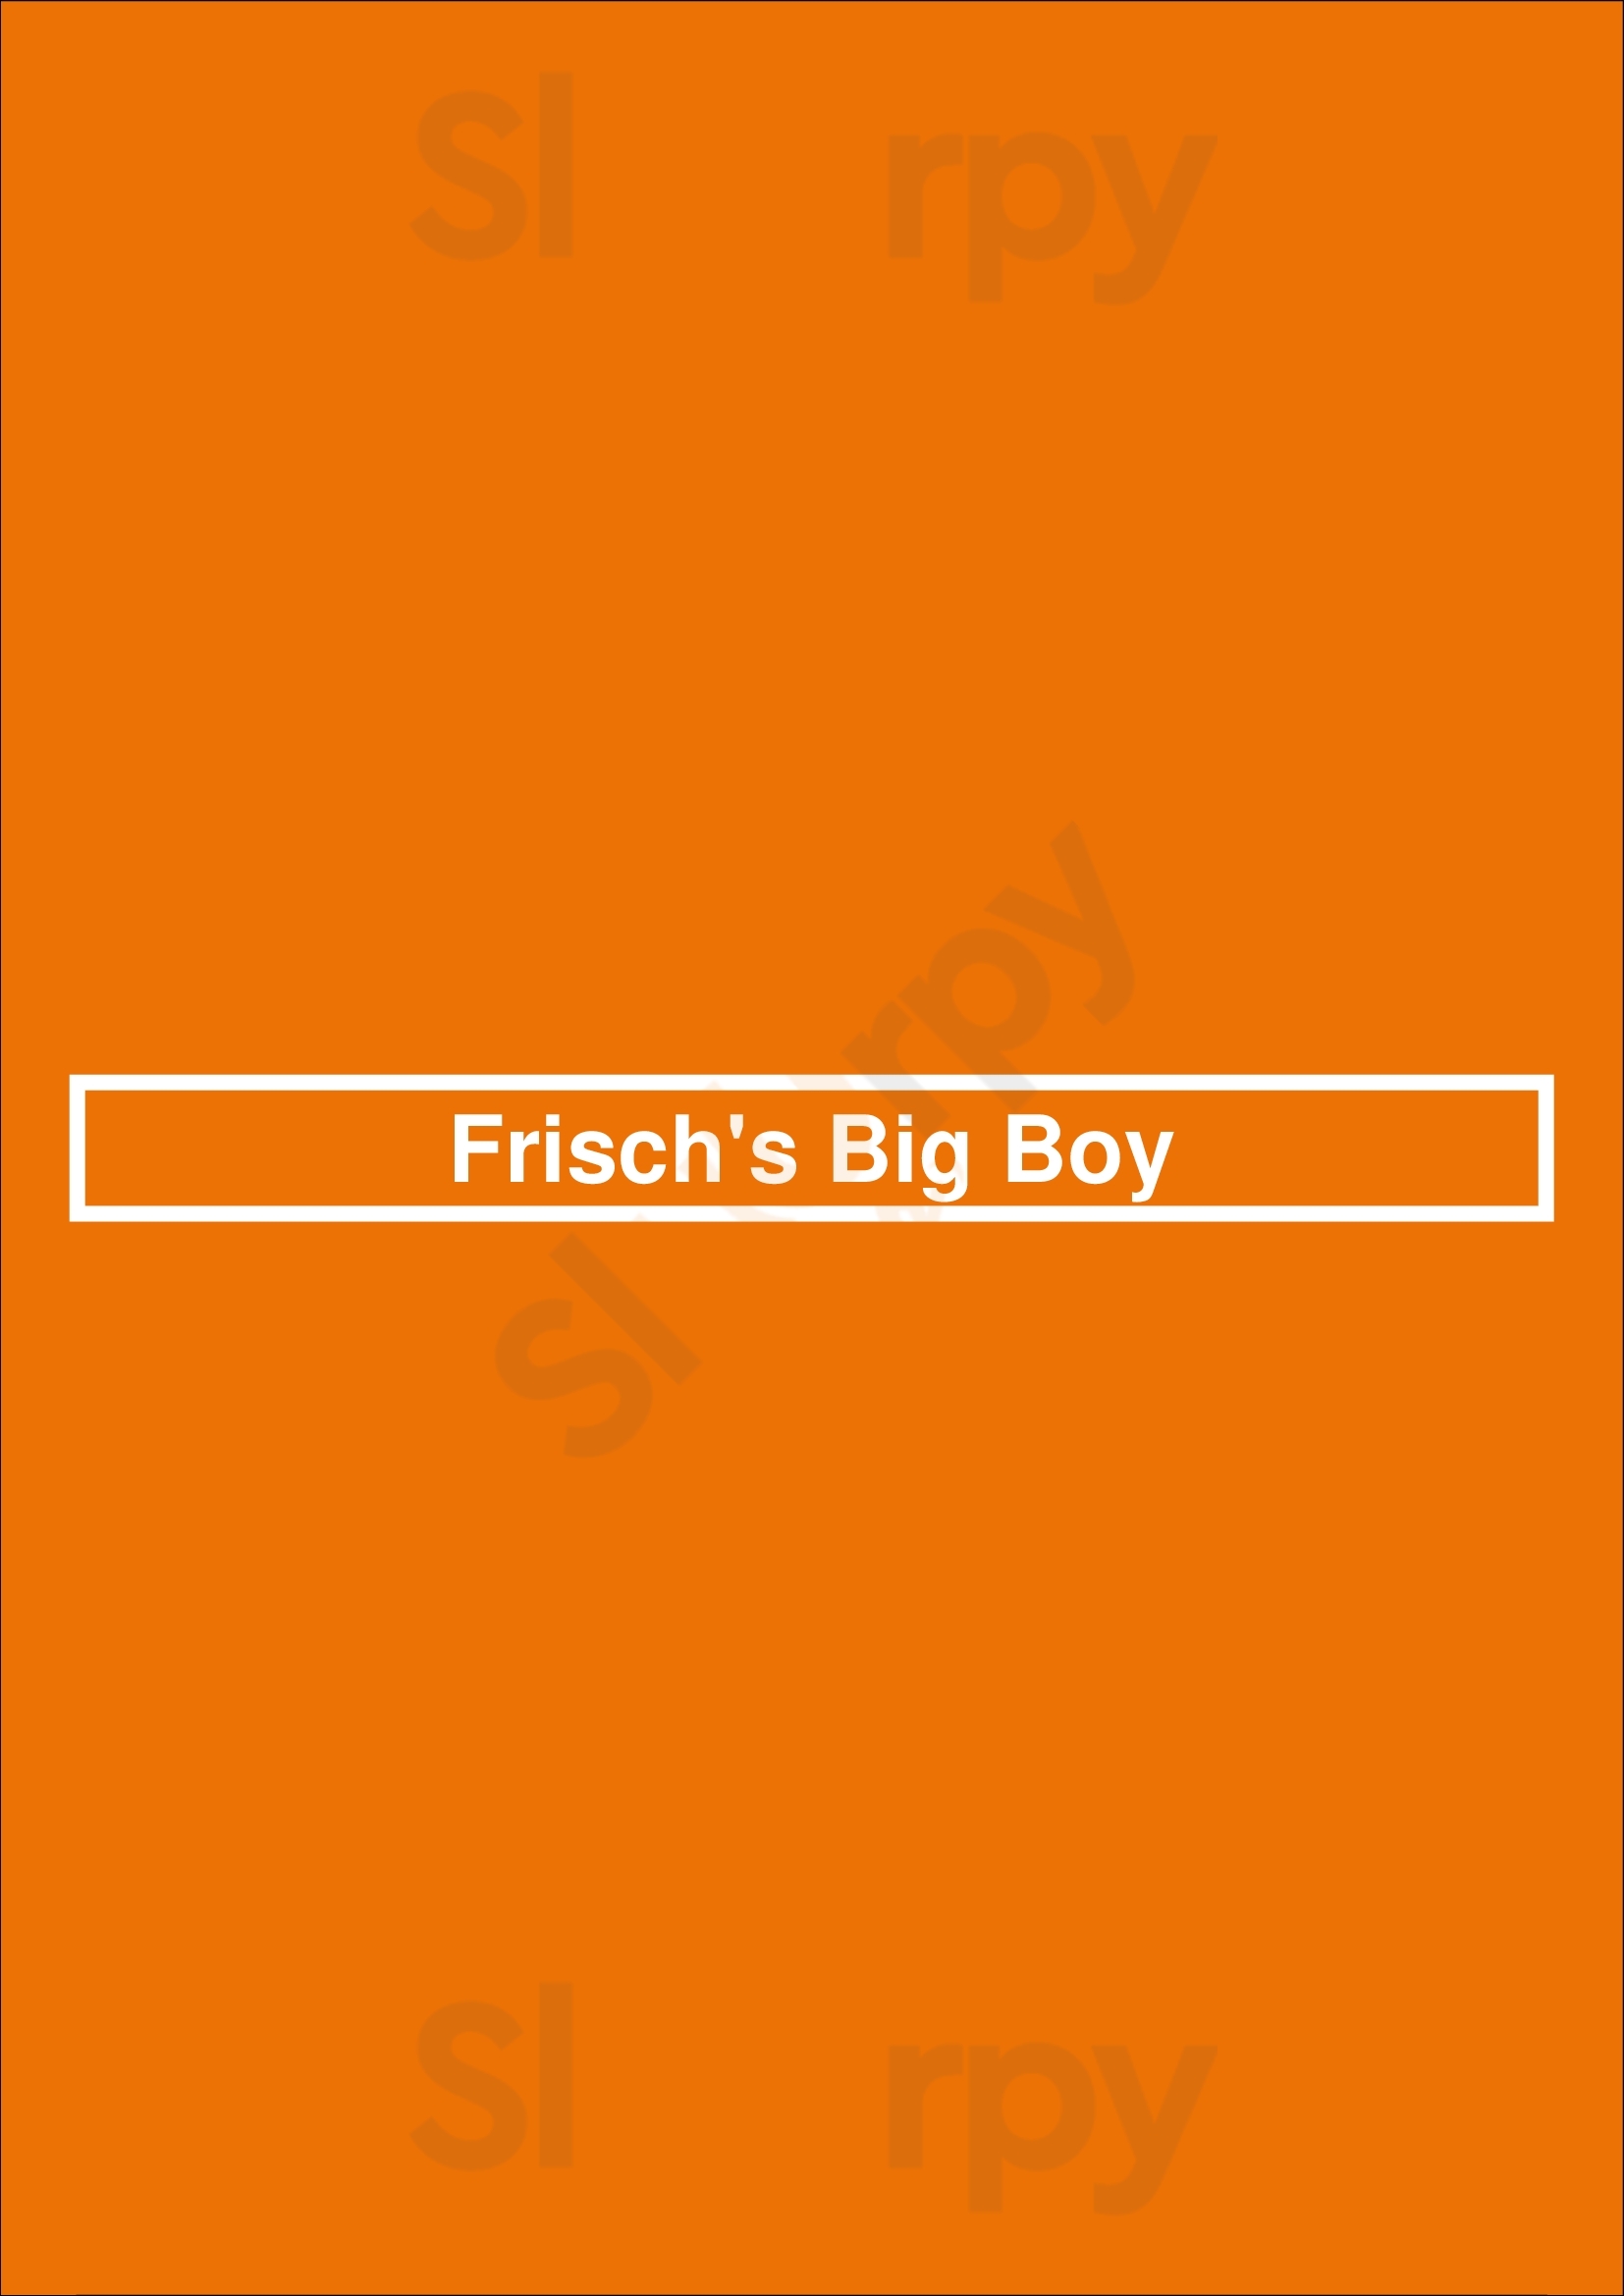 Frisch's Big Boy Lexington Menu - 1